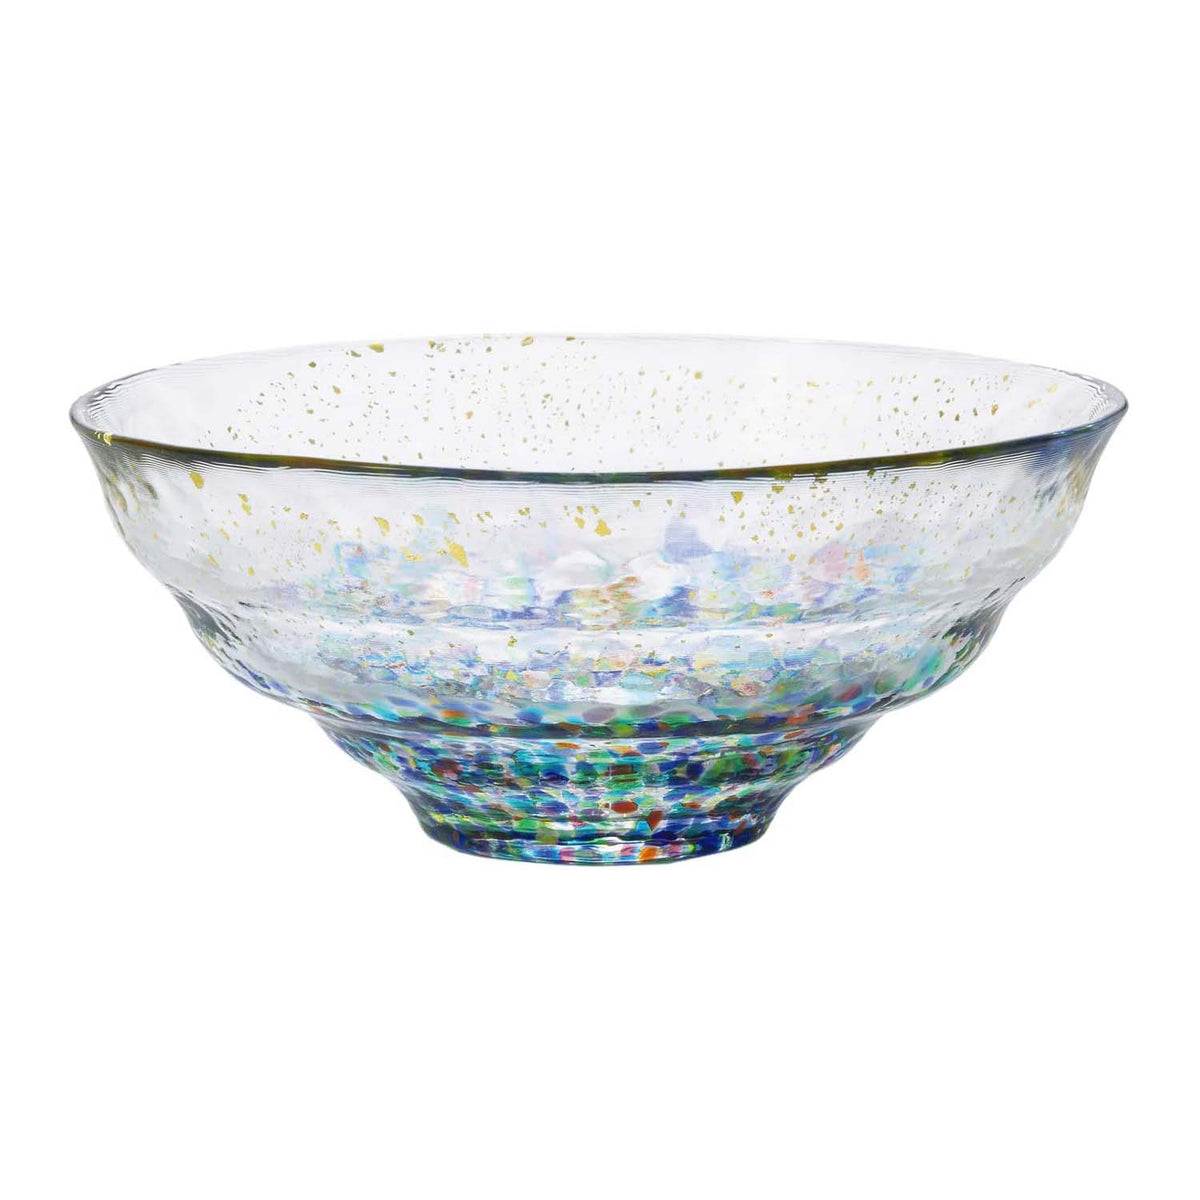 ADERIA Tsugaru Vidro Soda-Lime Glass Gold Leaf Paint Bowl